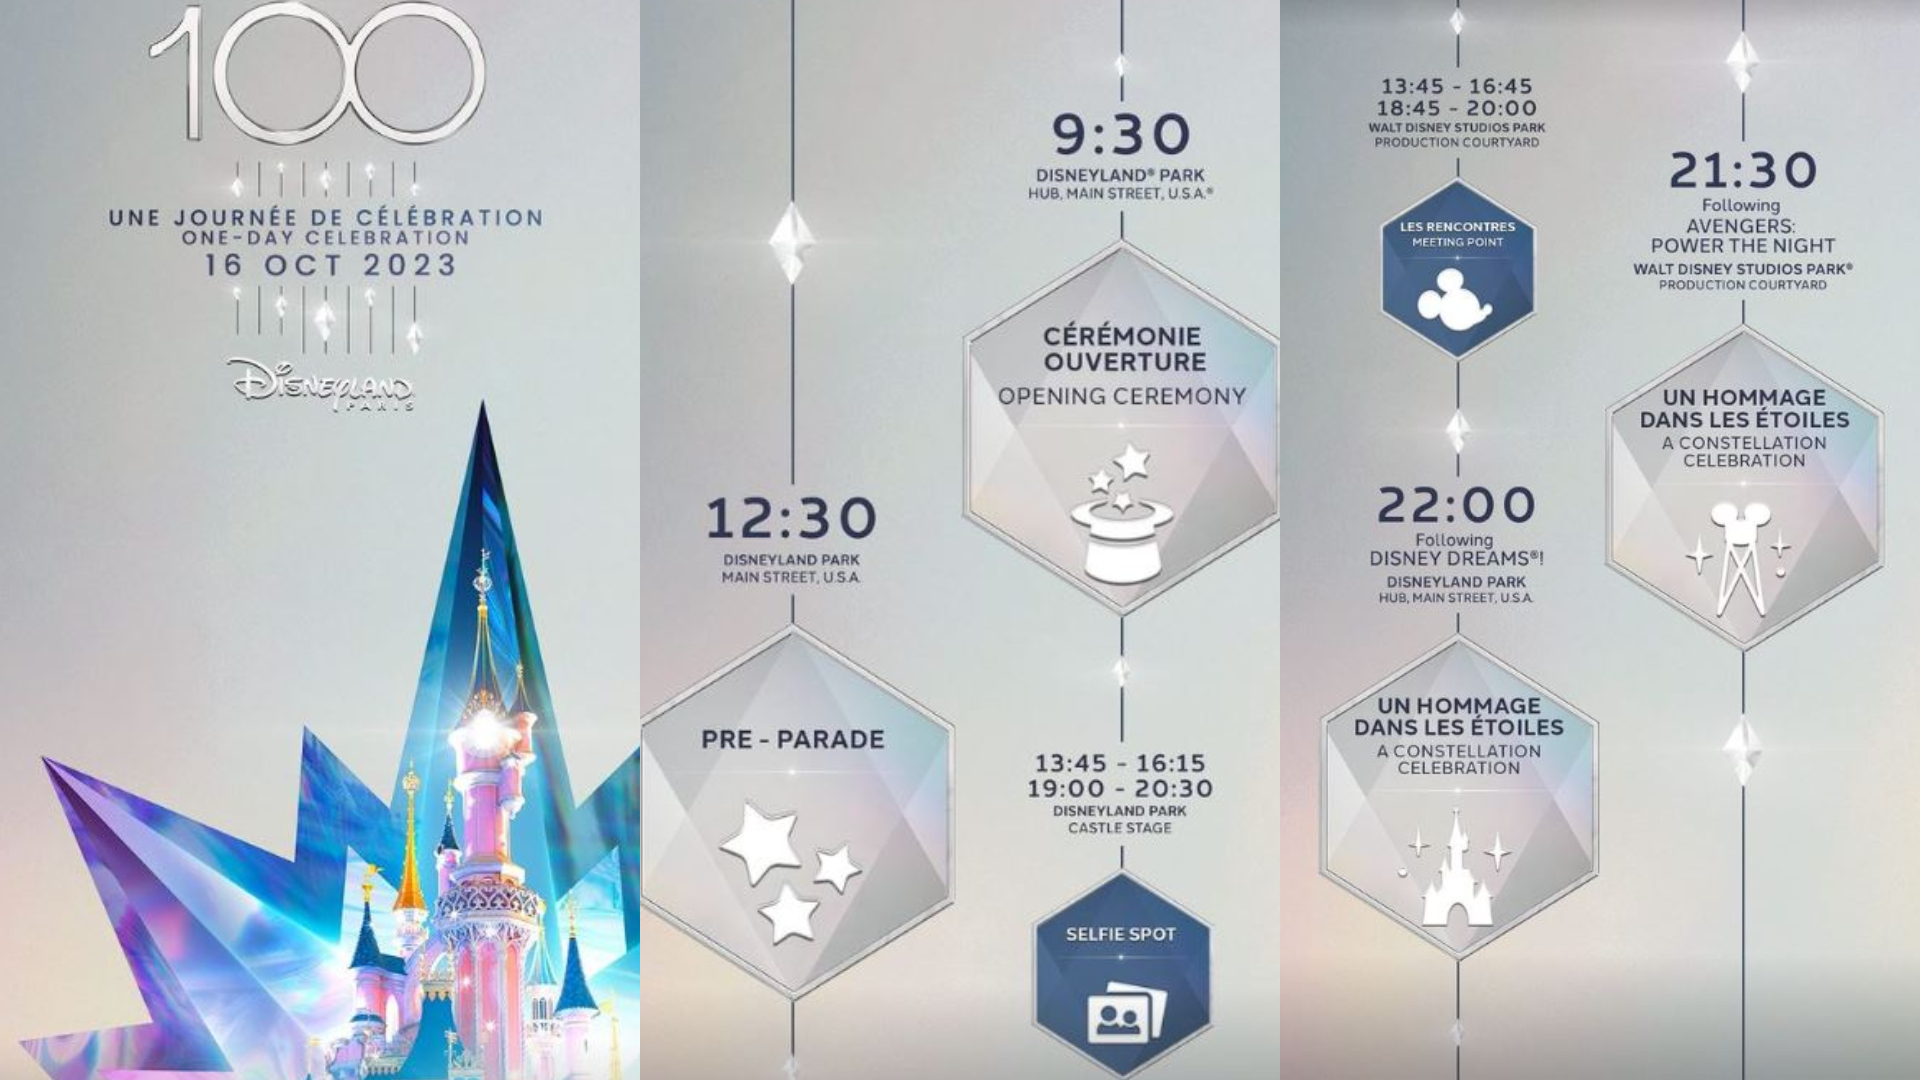 Disney 100: The Full Schedule for October 16th at Disneyland Paris - Magic  Dream News